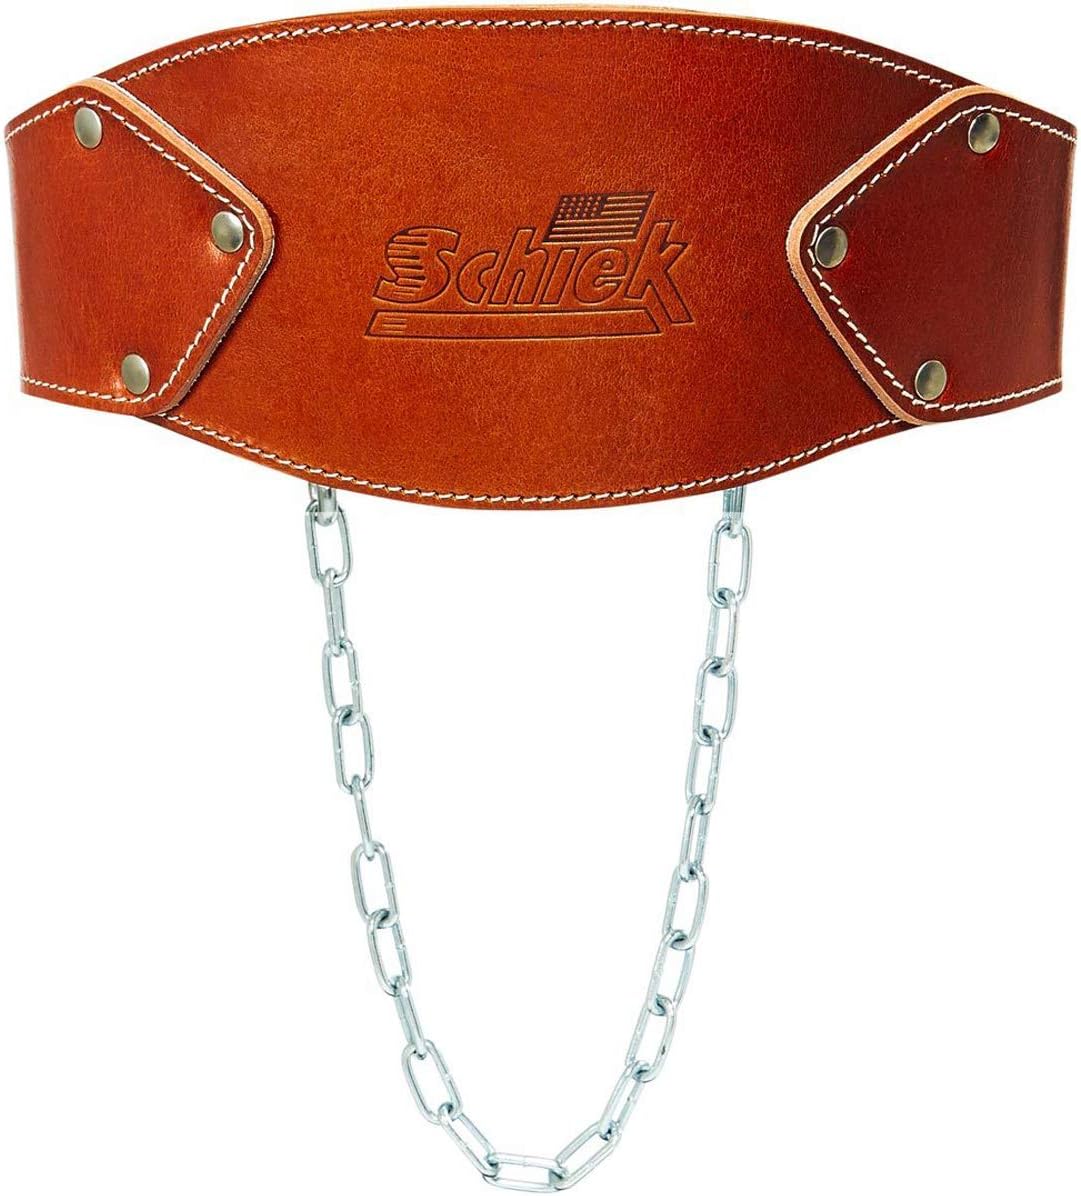 Schiek Leather Contour Dip Belt | Fitness Experience